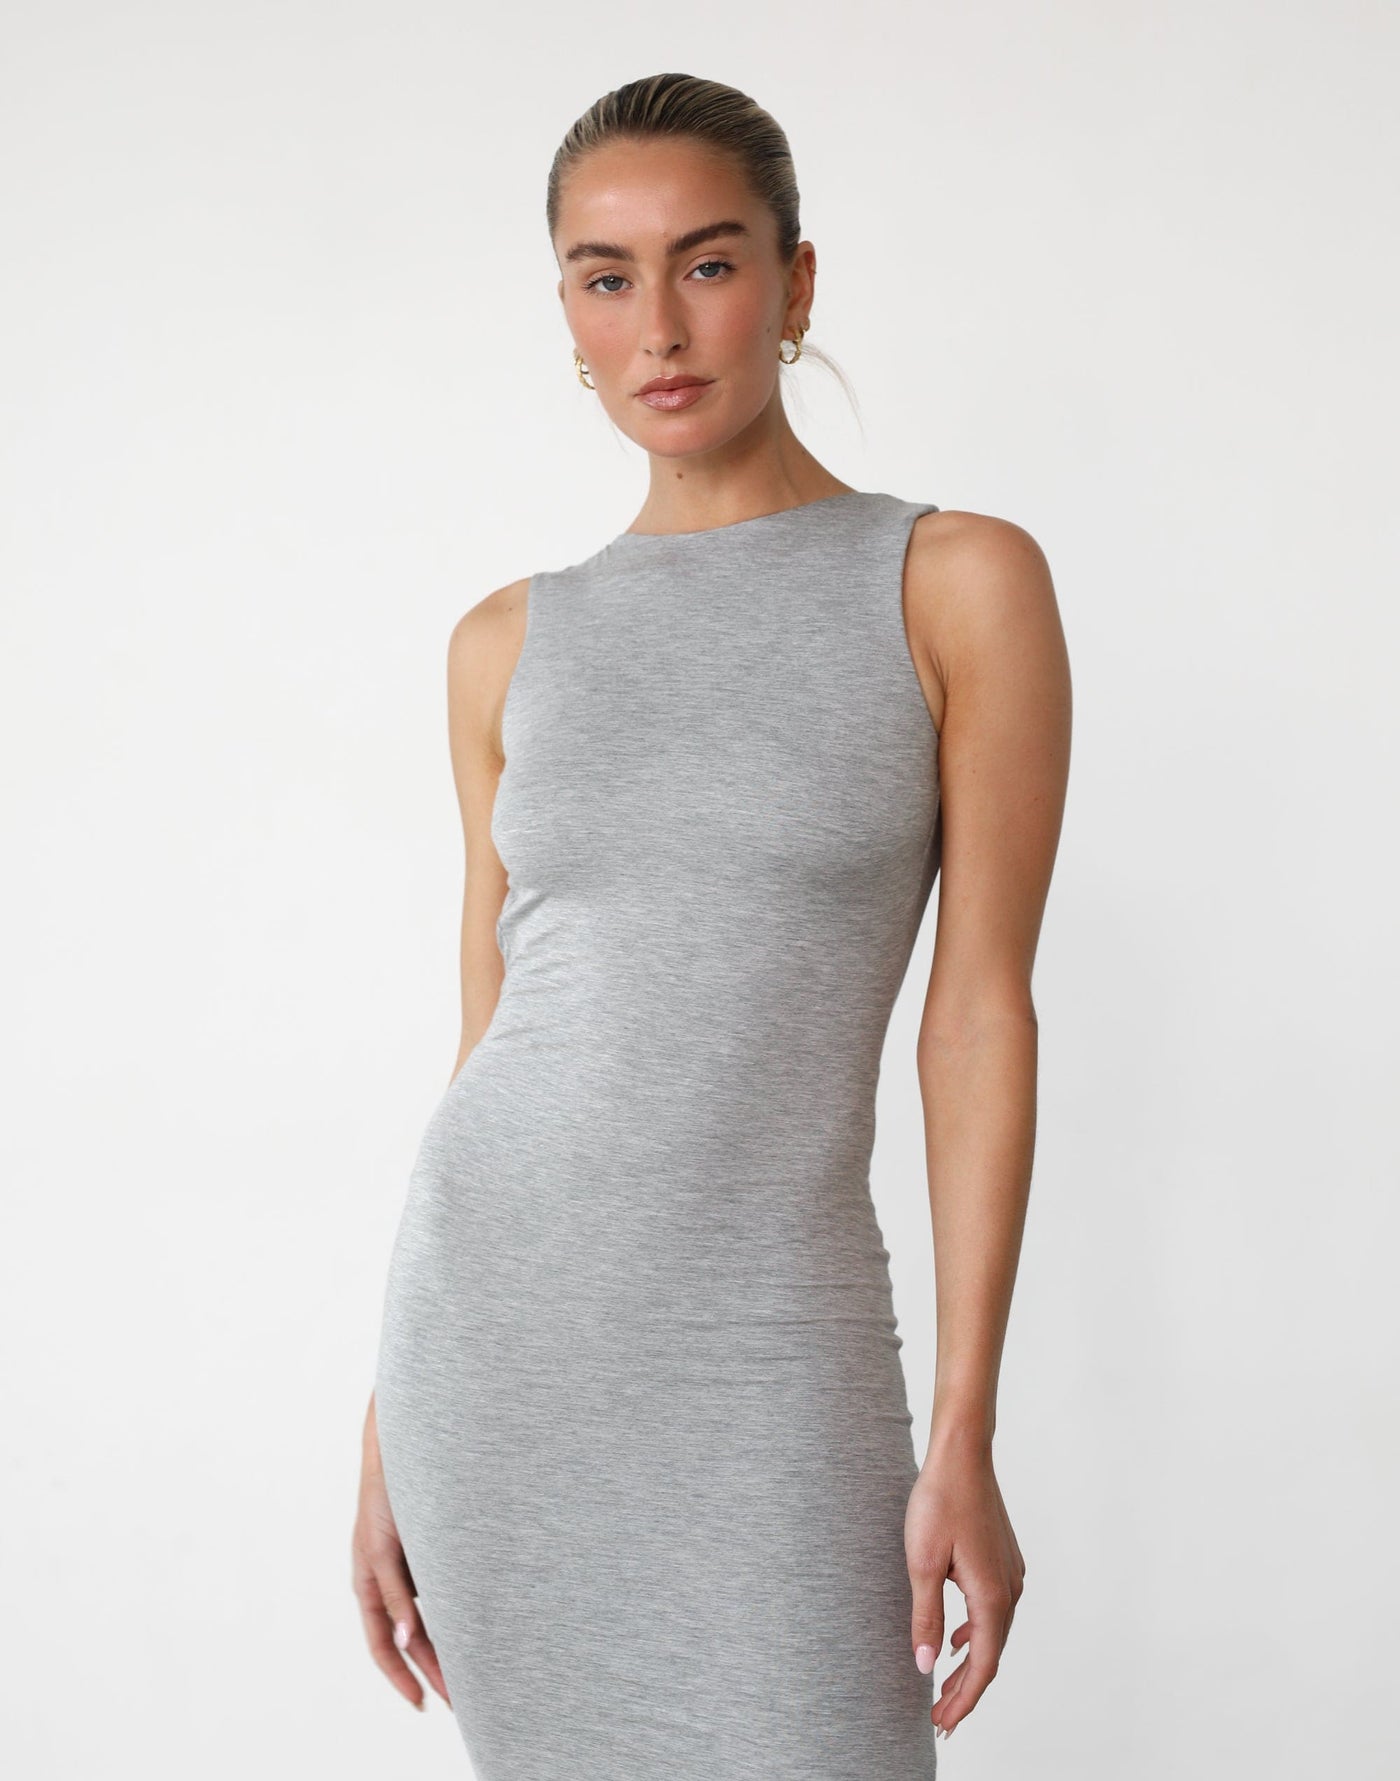 Luna Maxi Dress (Grey Marle) - Backless Bodycon Sleeveless Maxi Dress - Women's Dress - Charcoal Clothing